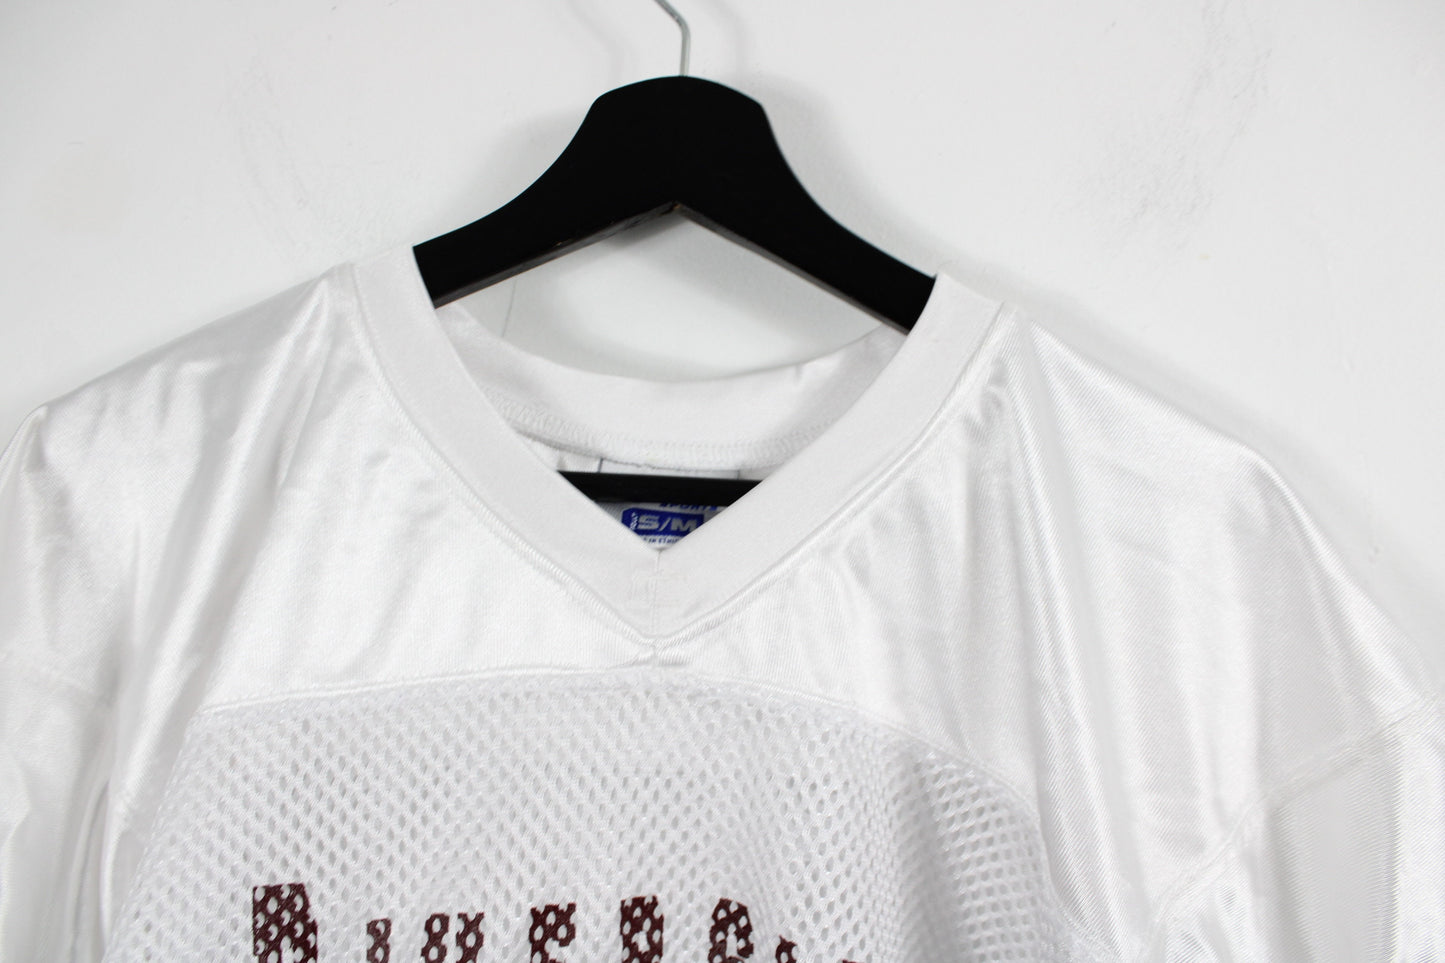 American-Football Jersey / Vintage White Cotton wash Shirt / 90s Sports Team Uniform